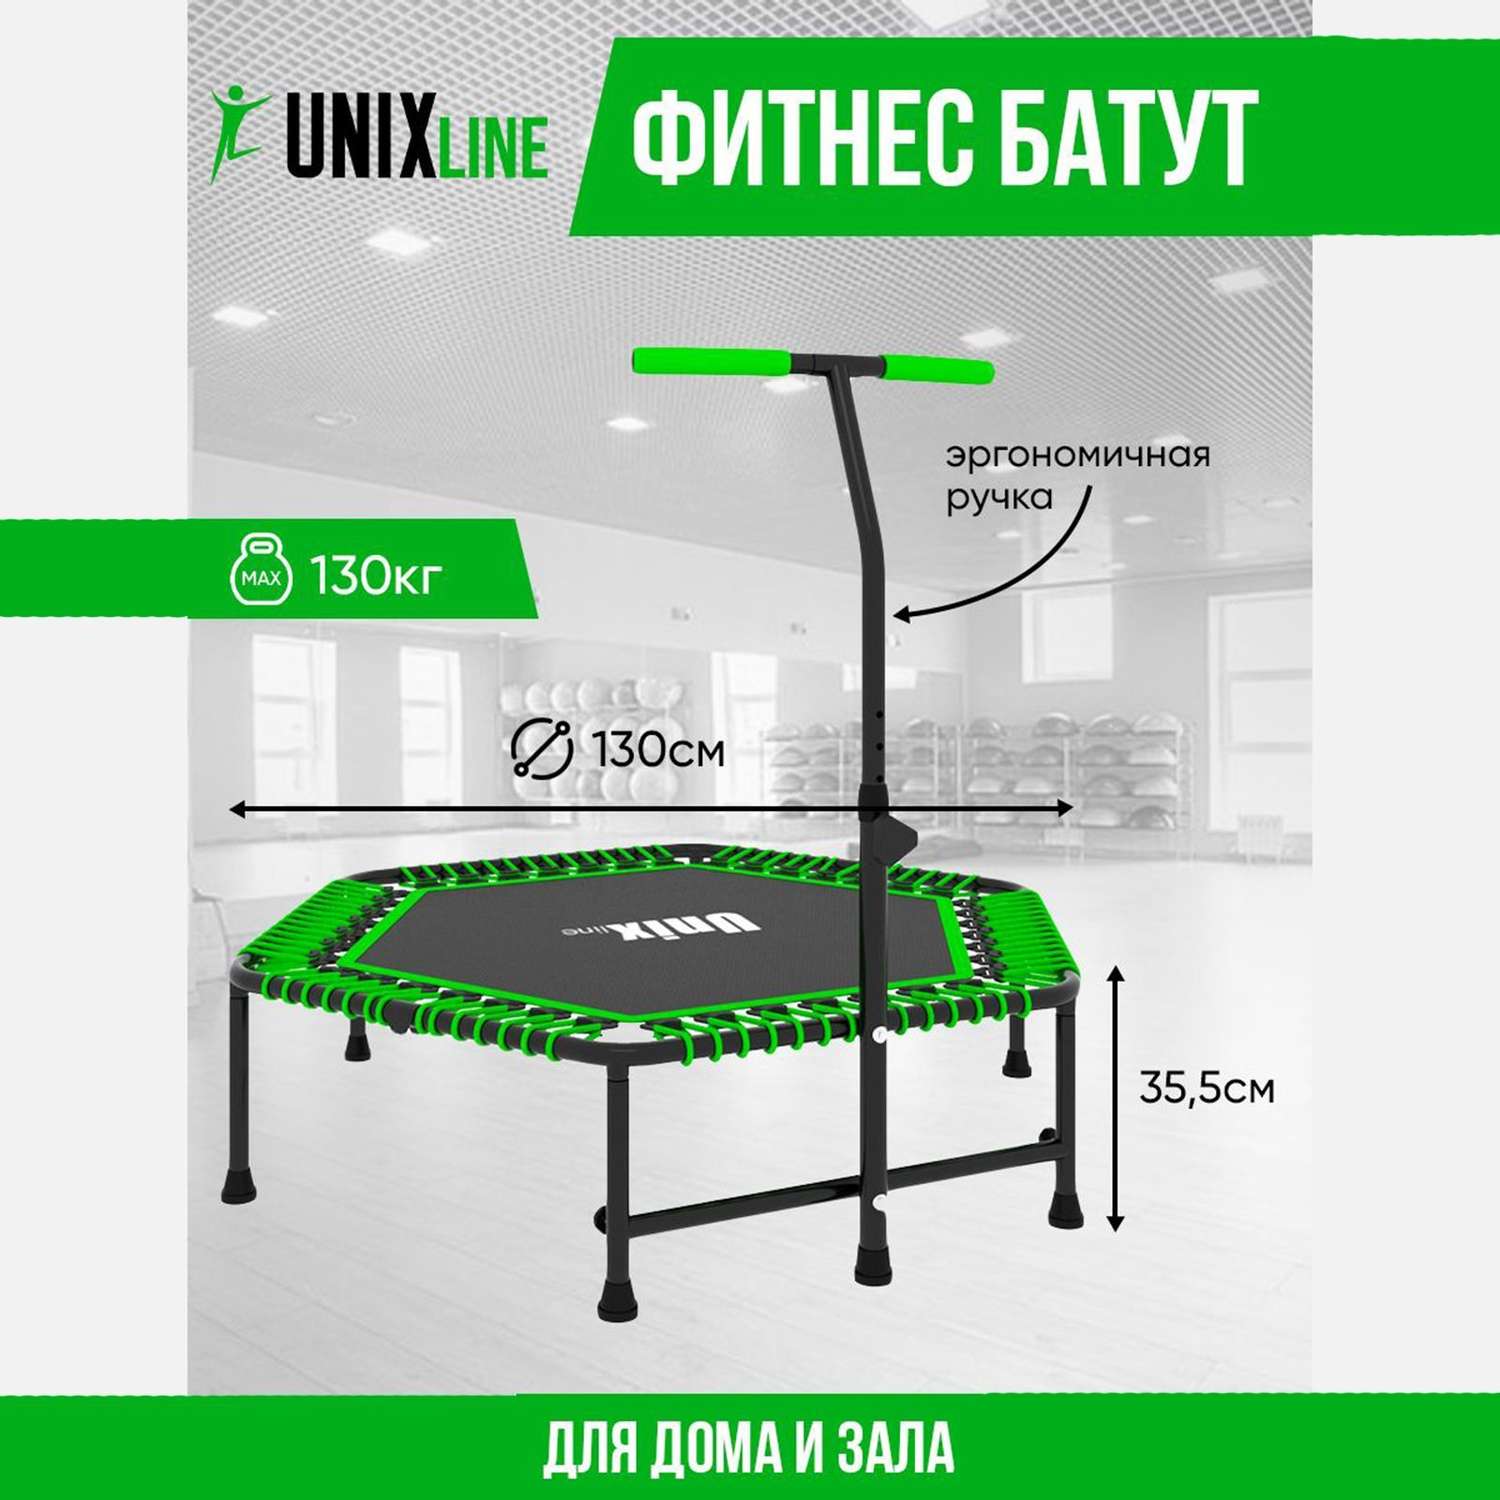 Батут спортивный с ручкой UNIX line FITNESS Green диаметр 130 см до 130 кг фитнес батут джампинг батут - фото 1